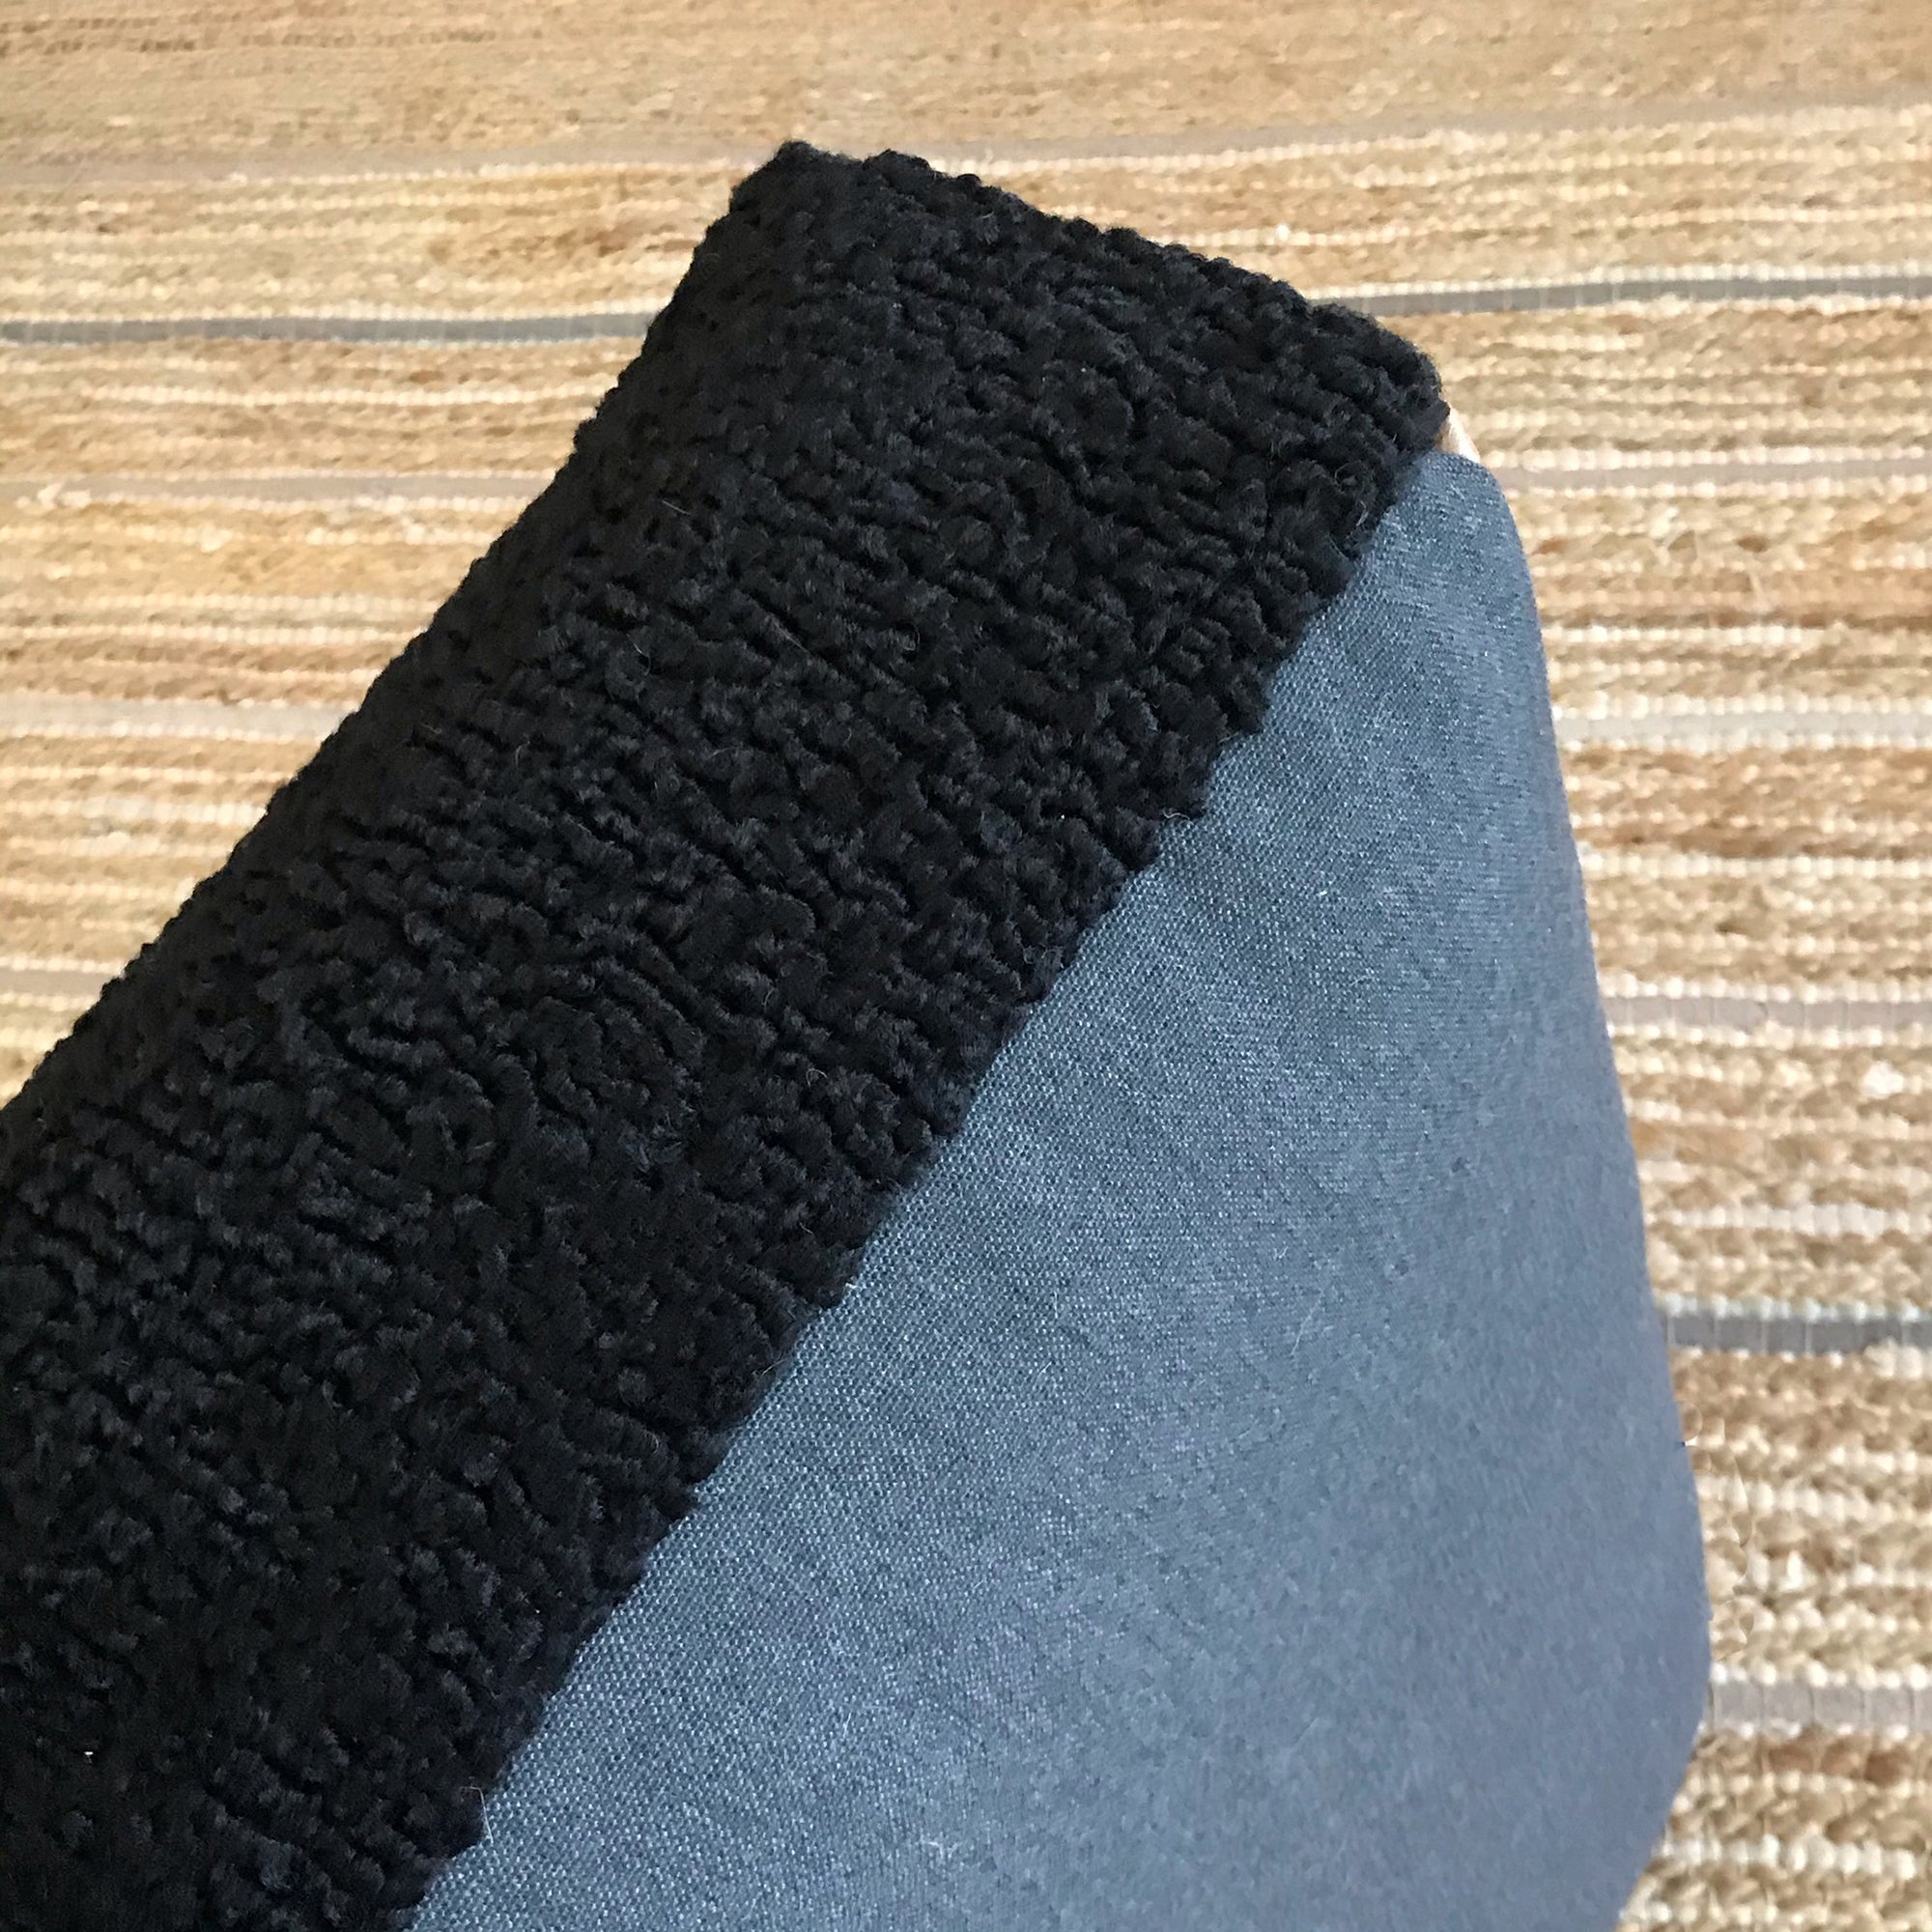 Faux Sheepskin and Real Leather Floor Cushion - Black/Bourbon/Tan